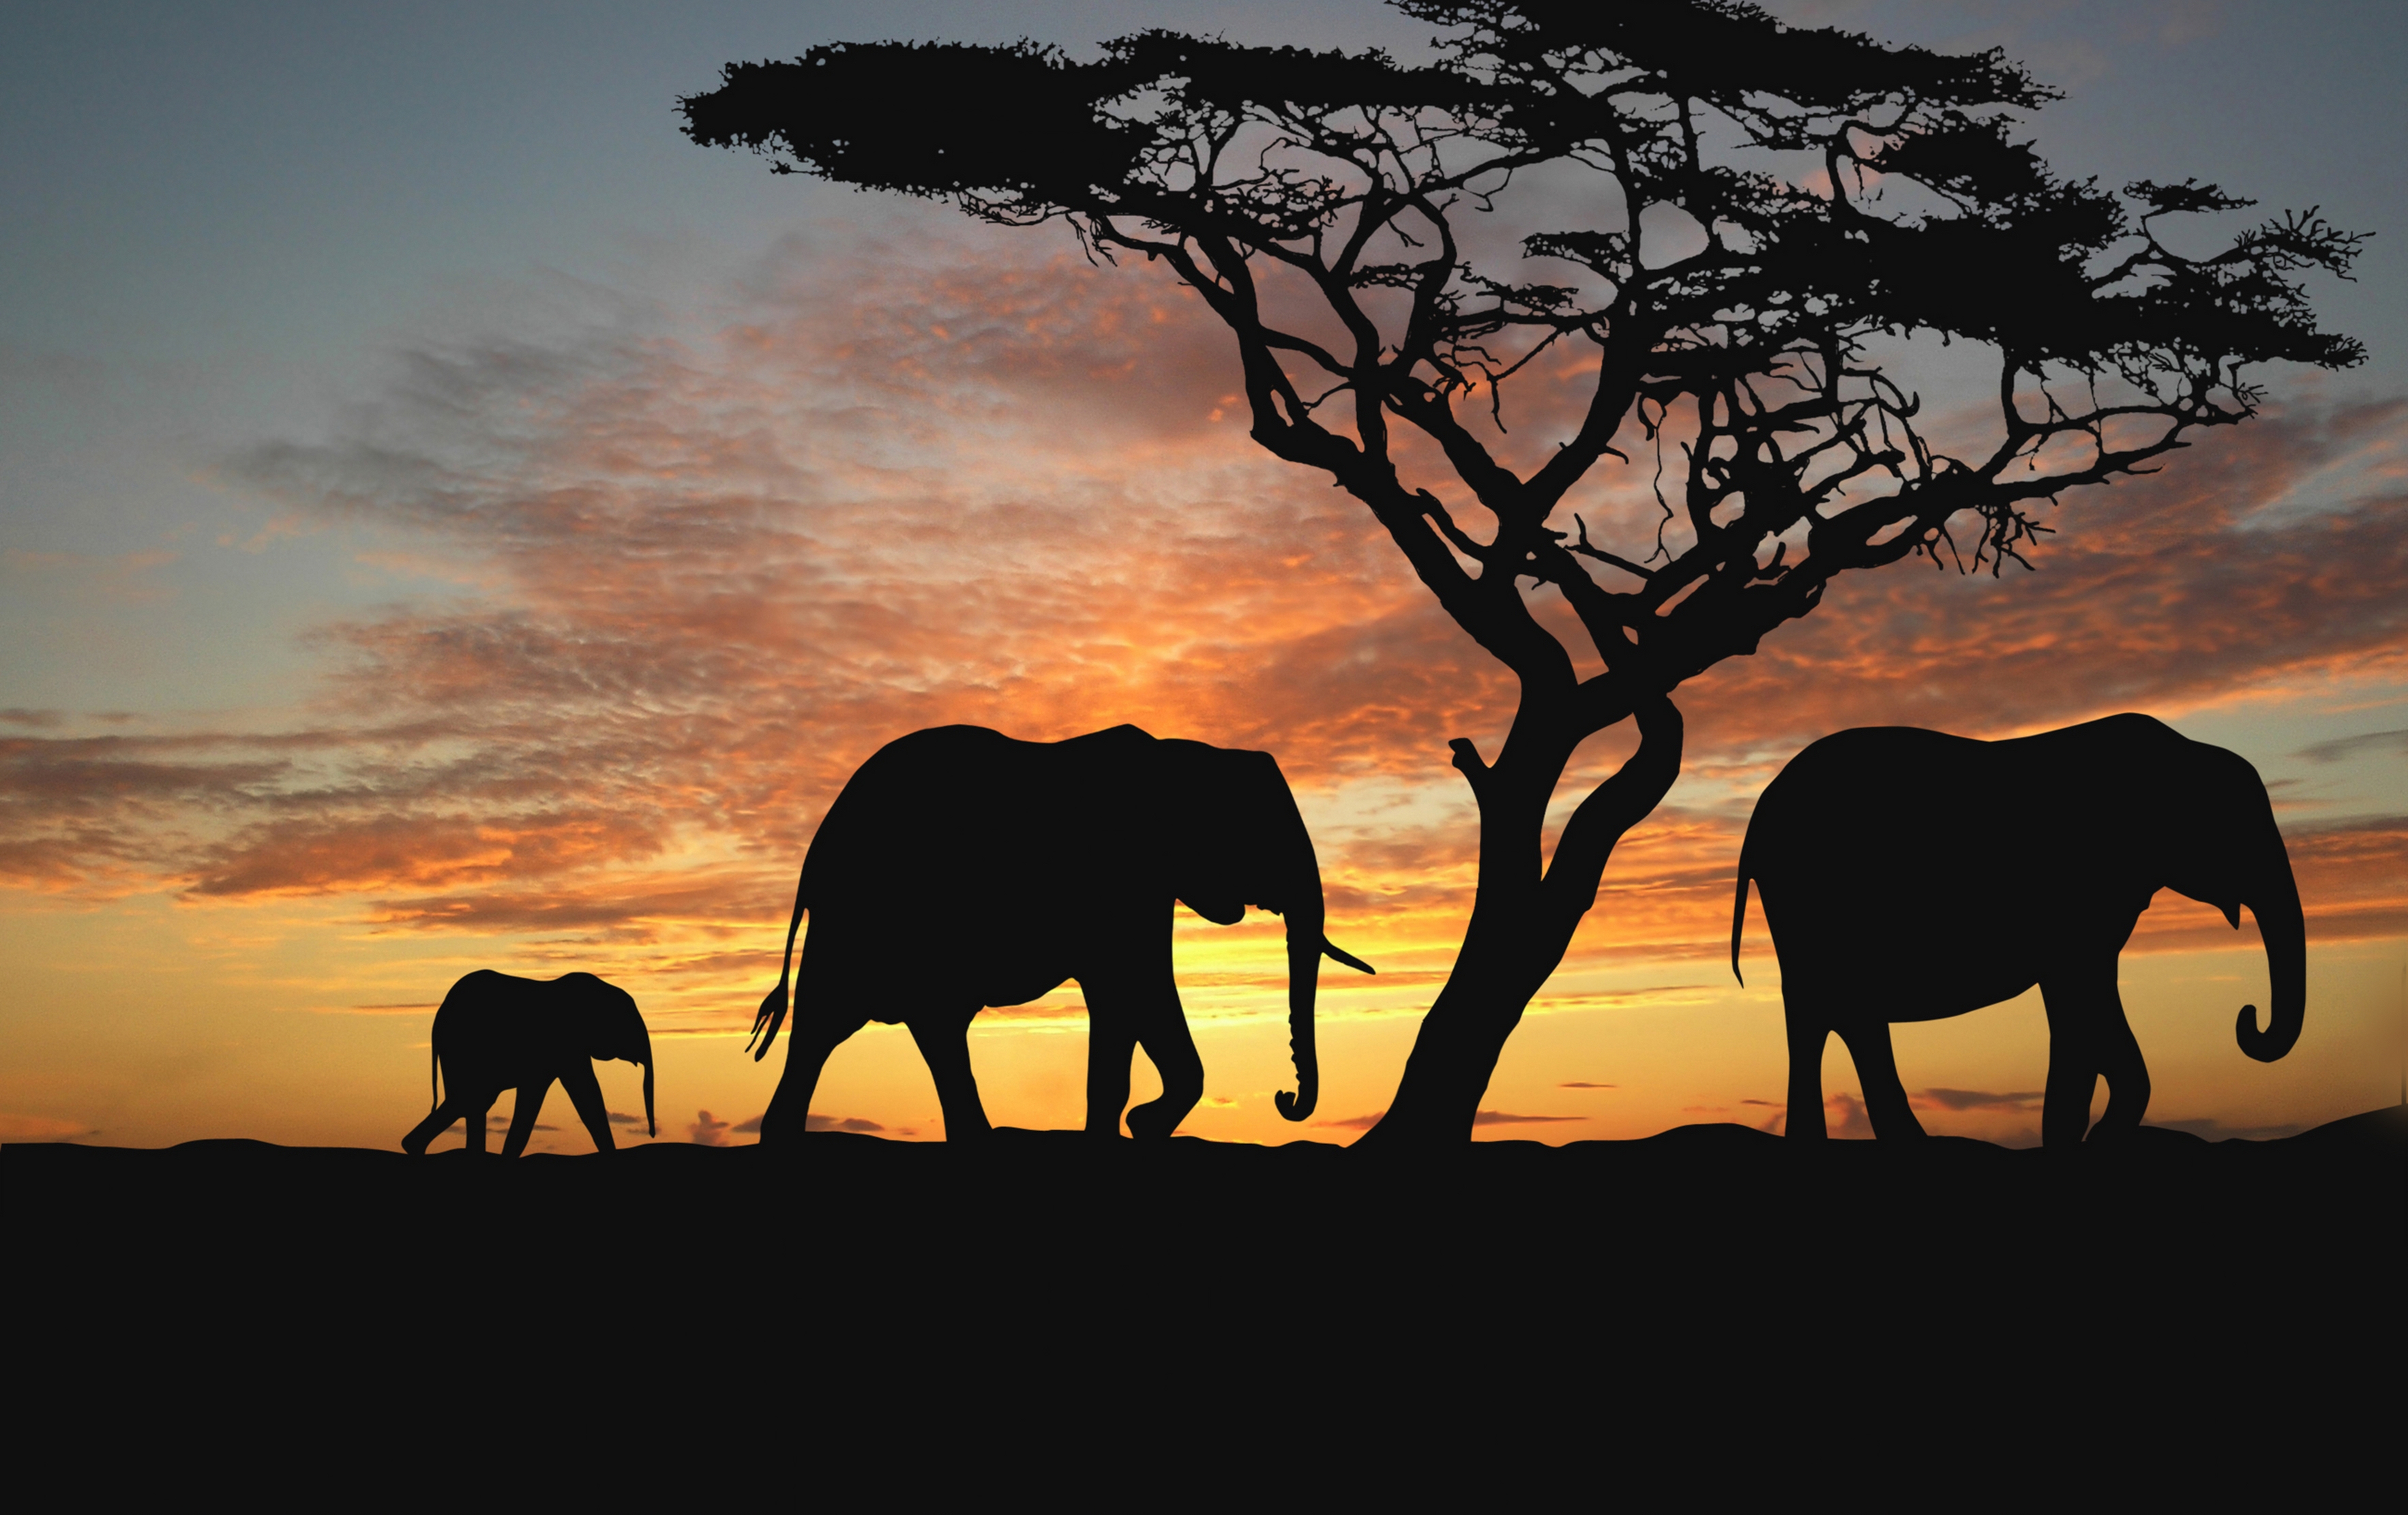 150036 descargar imagen elefantes, joven, árboles, oscuro, silueta, paseo, joey: fondos de pantalla y protectores de pantalla gratis